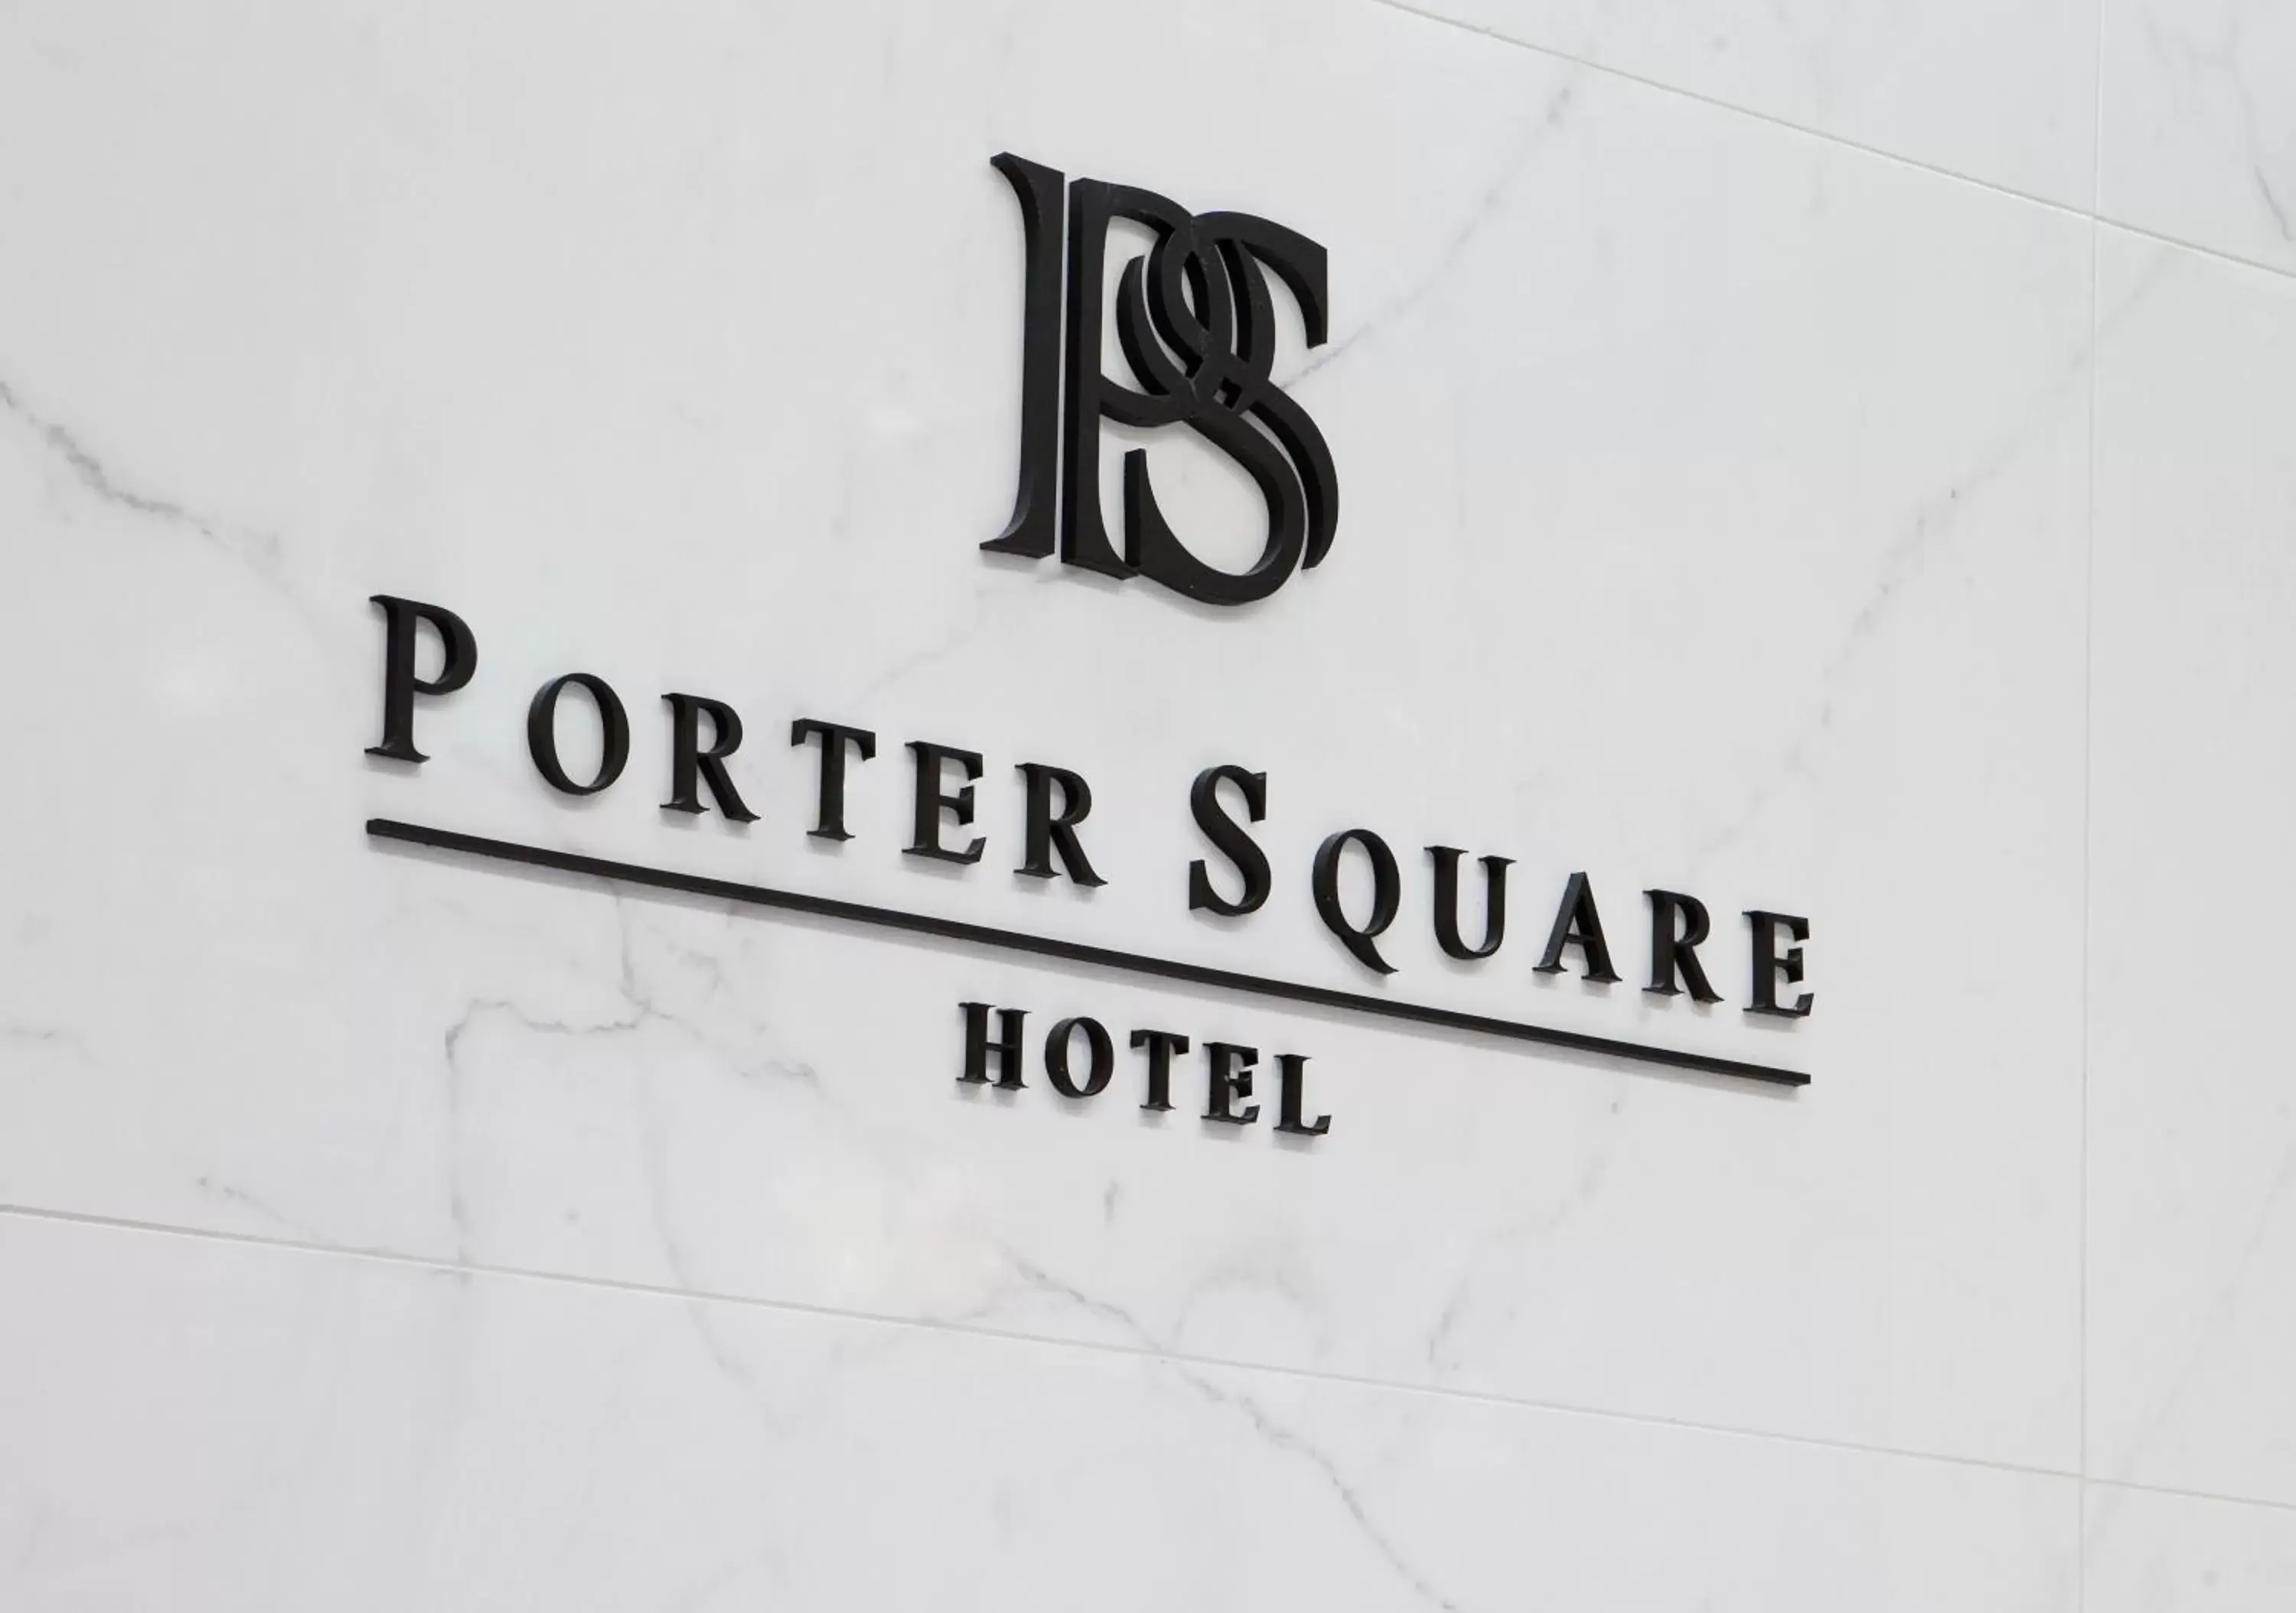 Property logo or sign, Property Logo/Sign in Porter Square Hotel